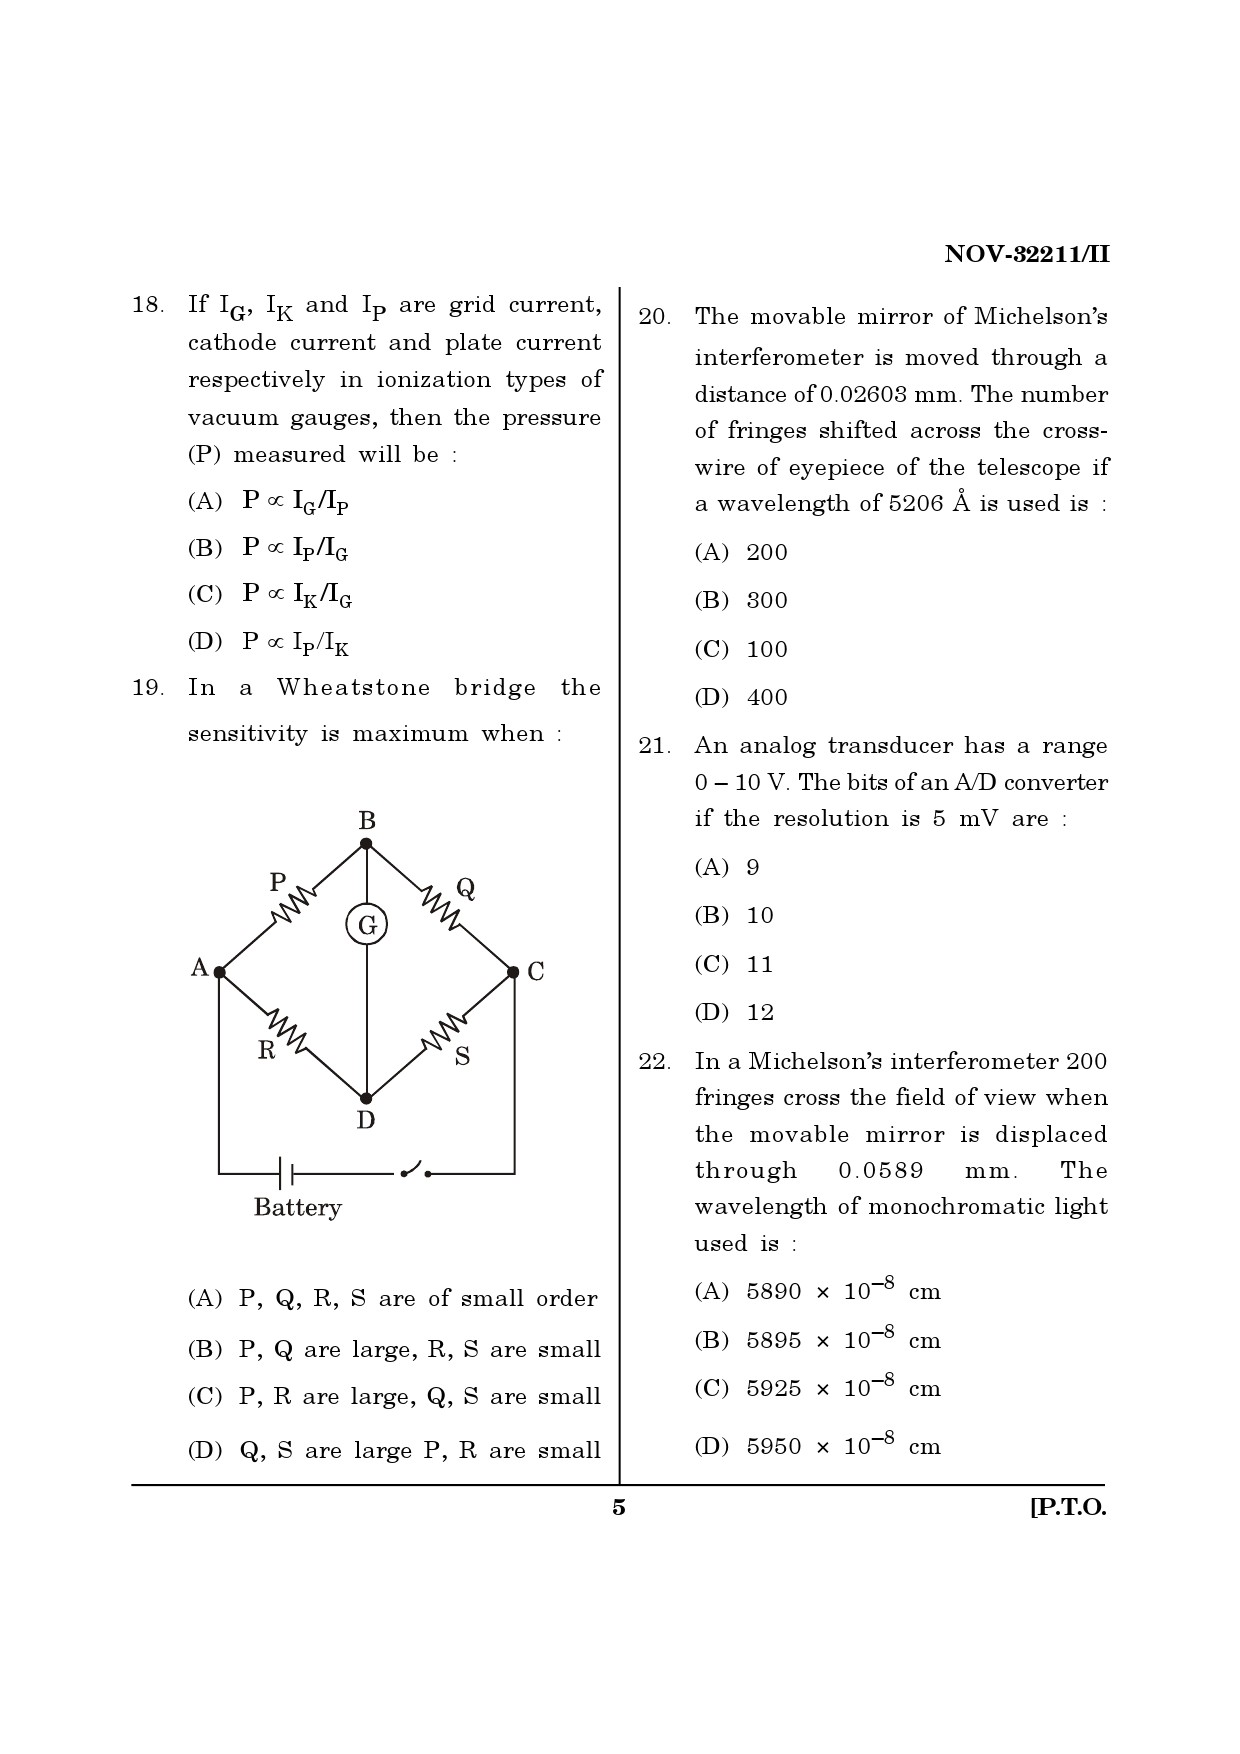 Maharashtra SET Physics Question Paper II November 2011 5